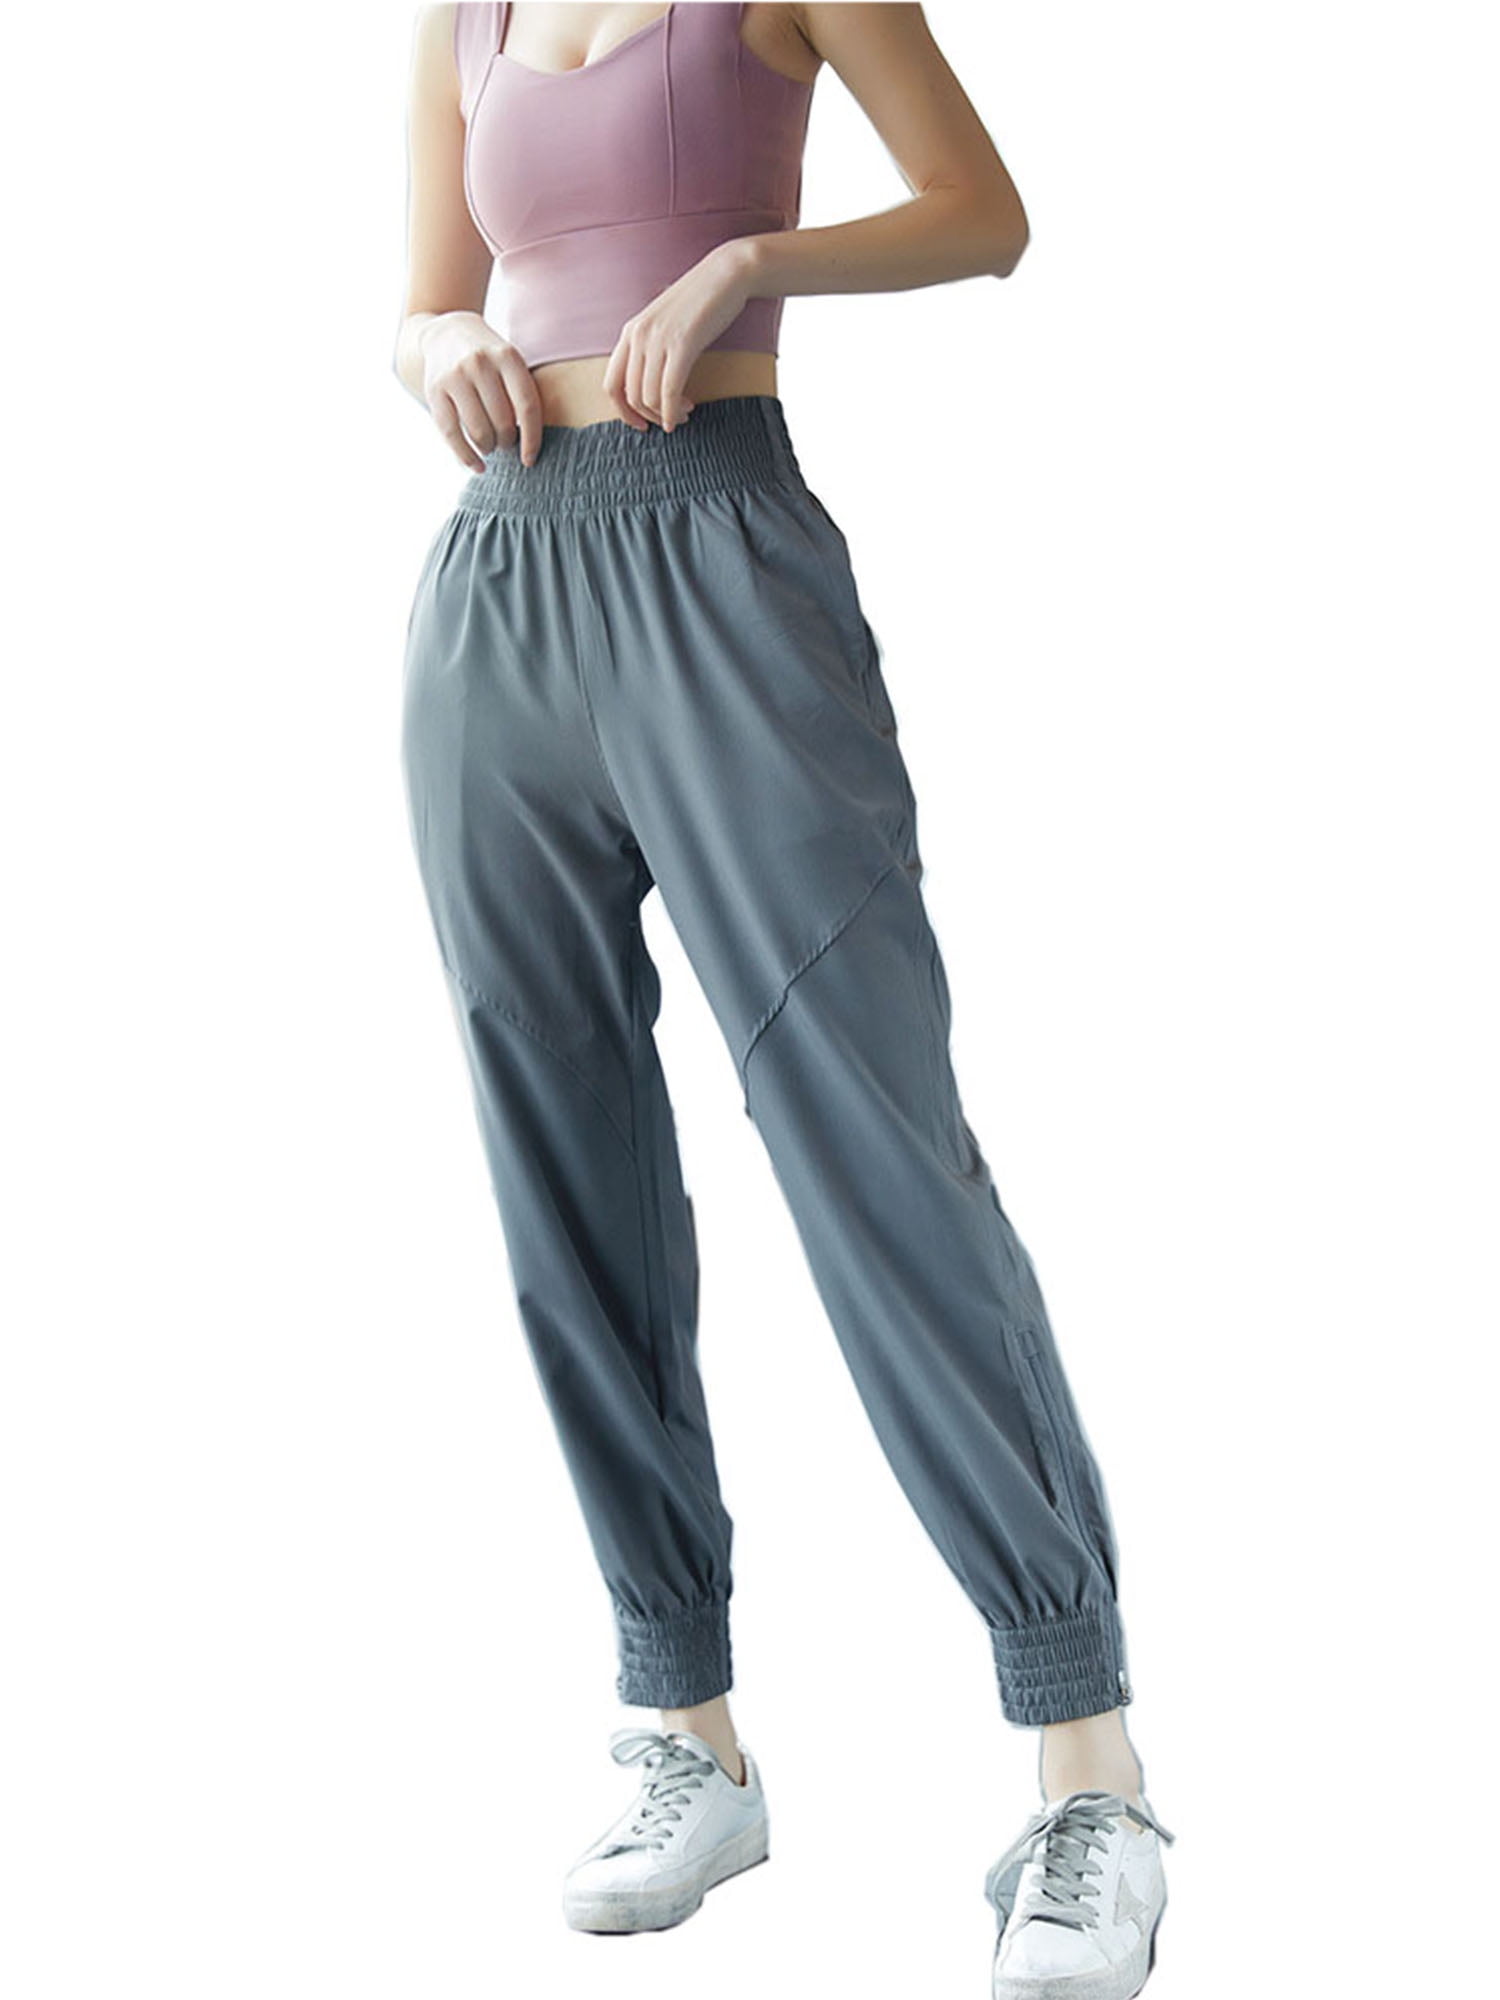 LA Gear Girls 3/4 Length Jogging Bottoms Sweatpants Pants Soft Elastic Waist